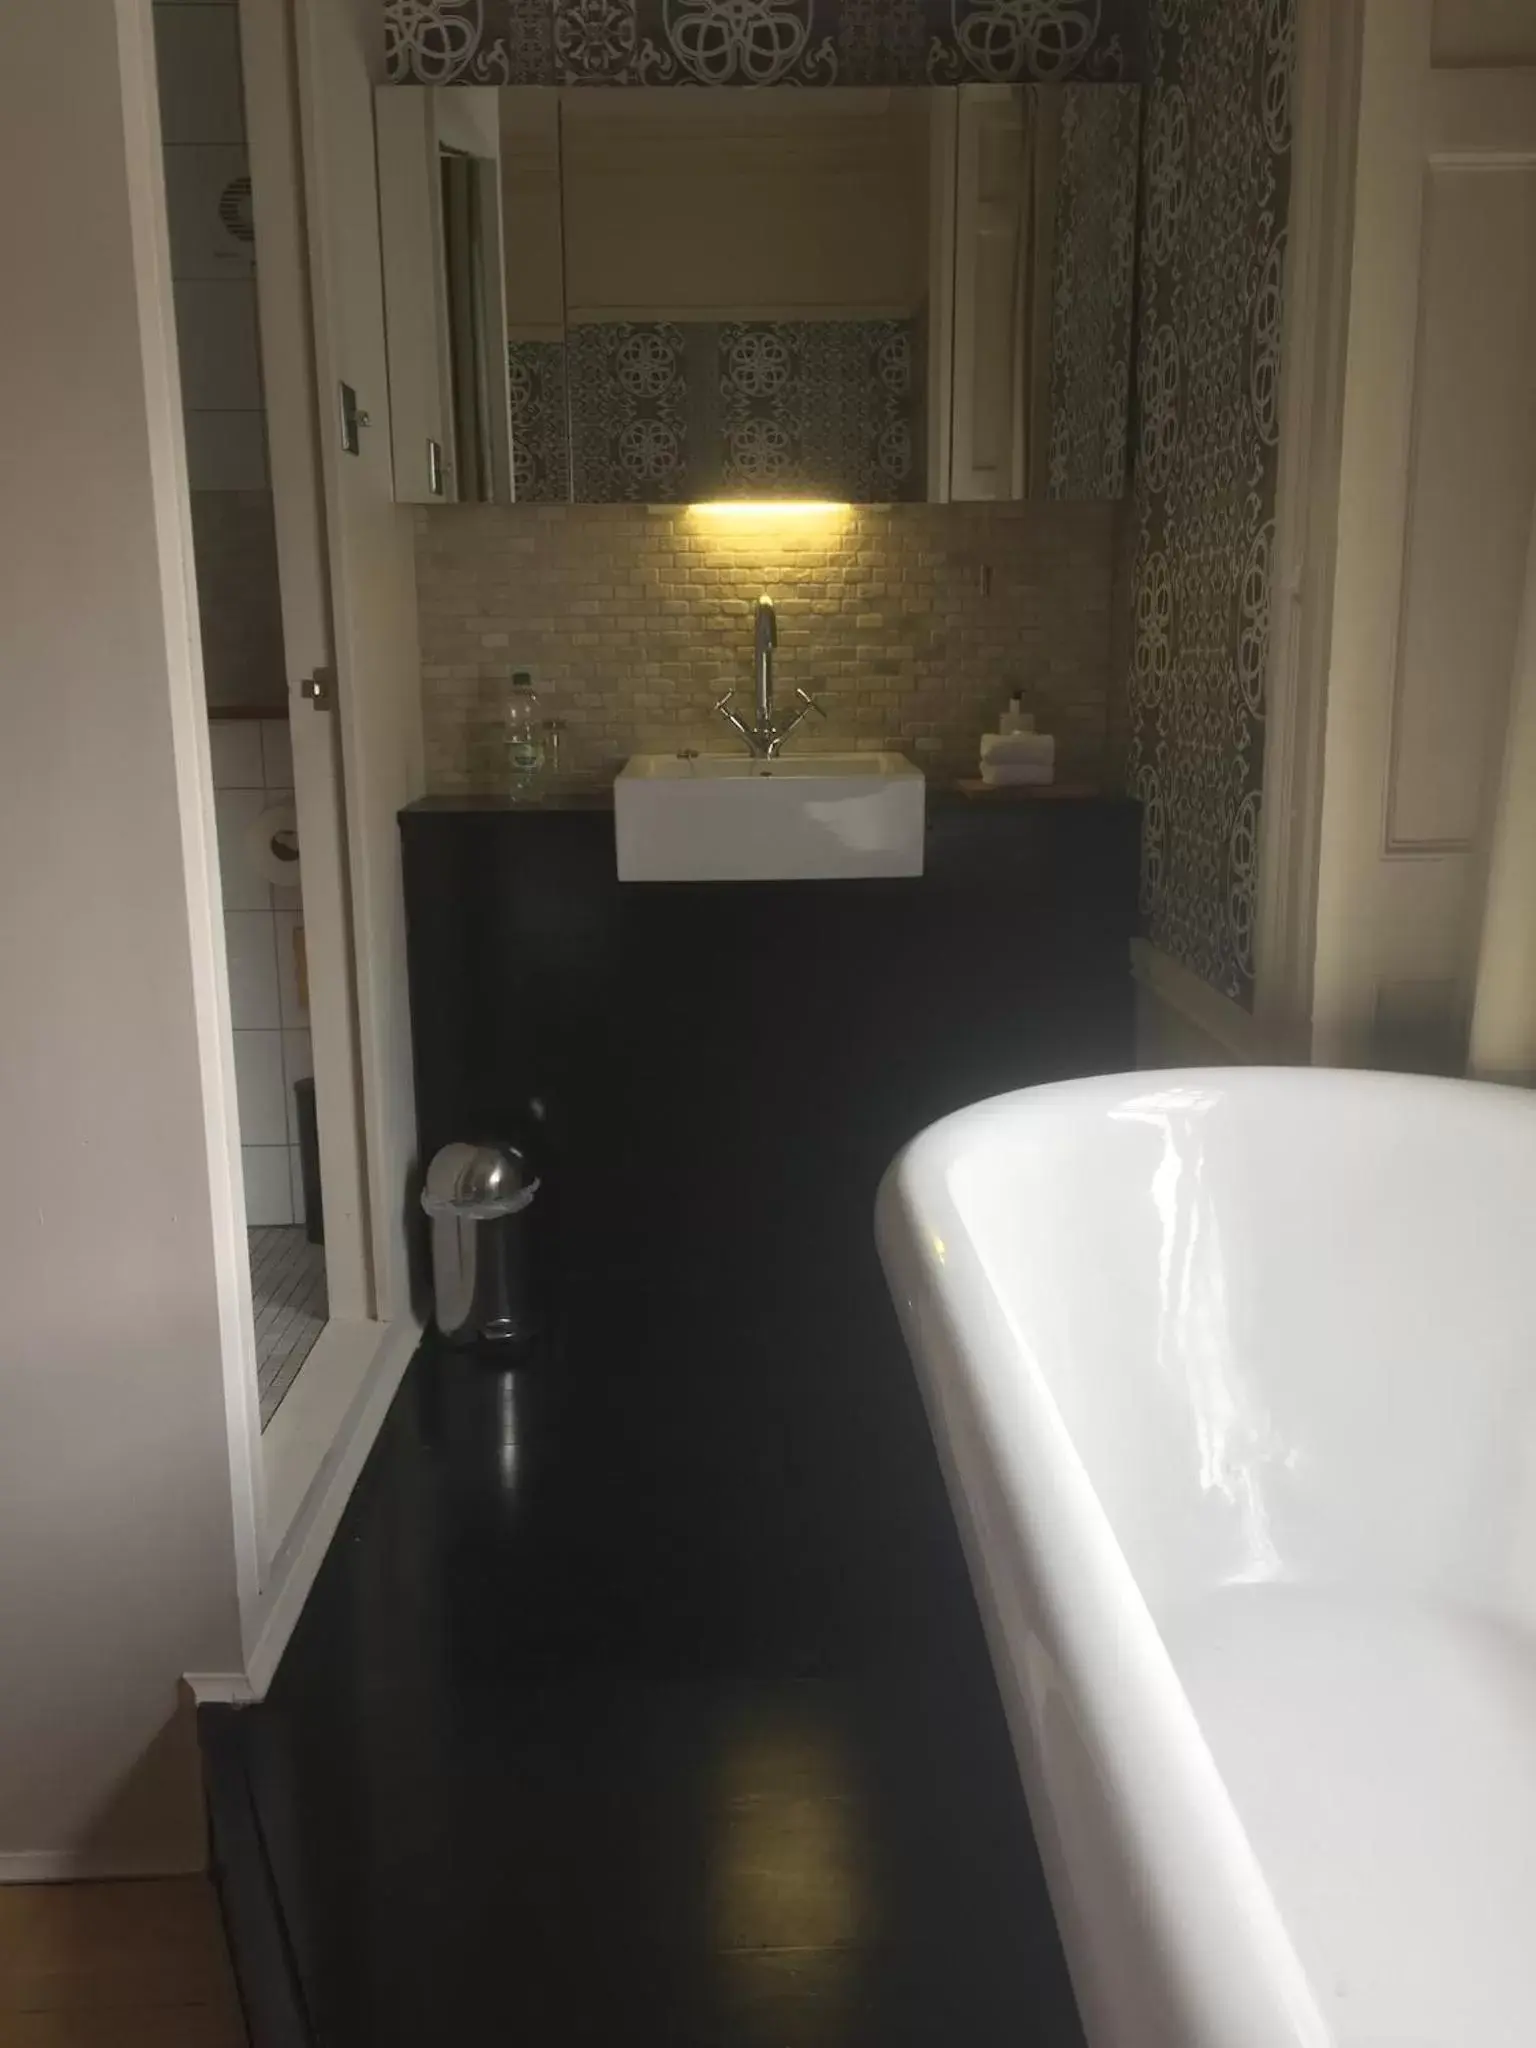 Bathroom in manorhaus RUTHIN - manorhaus collection